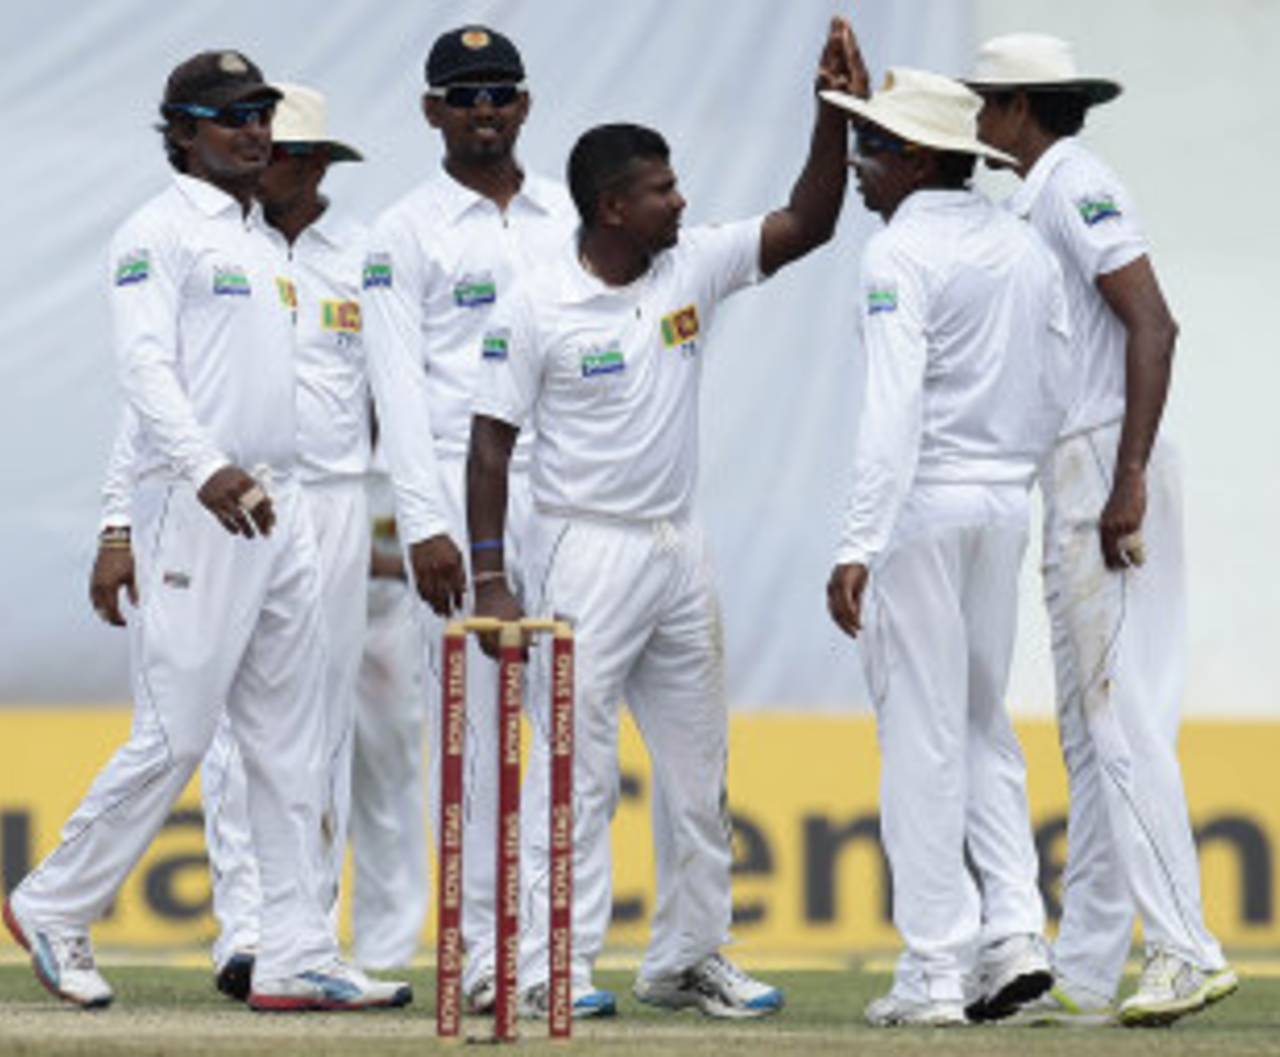 Rangana Herath took two wickets before lunch, Sri Lanka v New Zealand, 2nd Test, Colombo, 2nd day, November 26, 2012